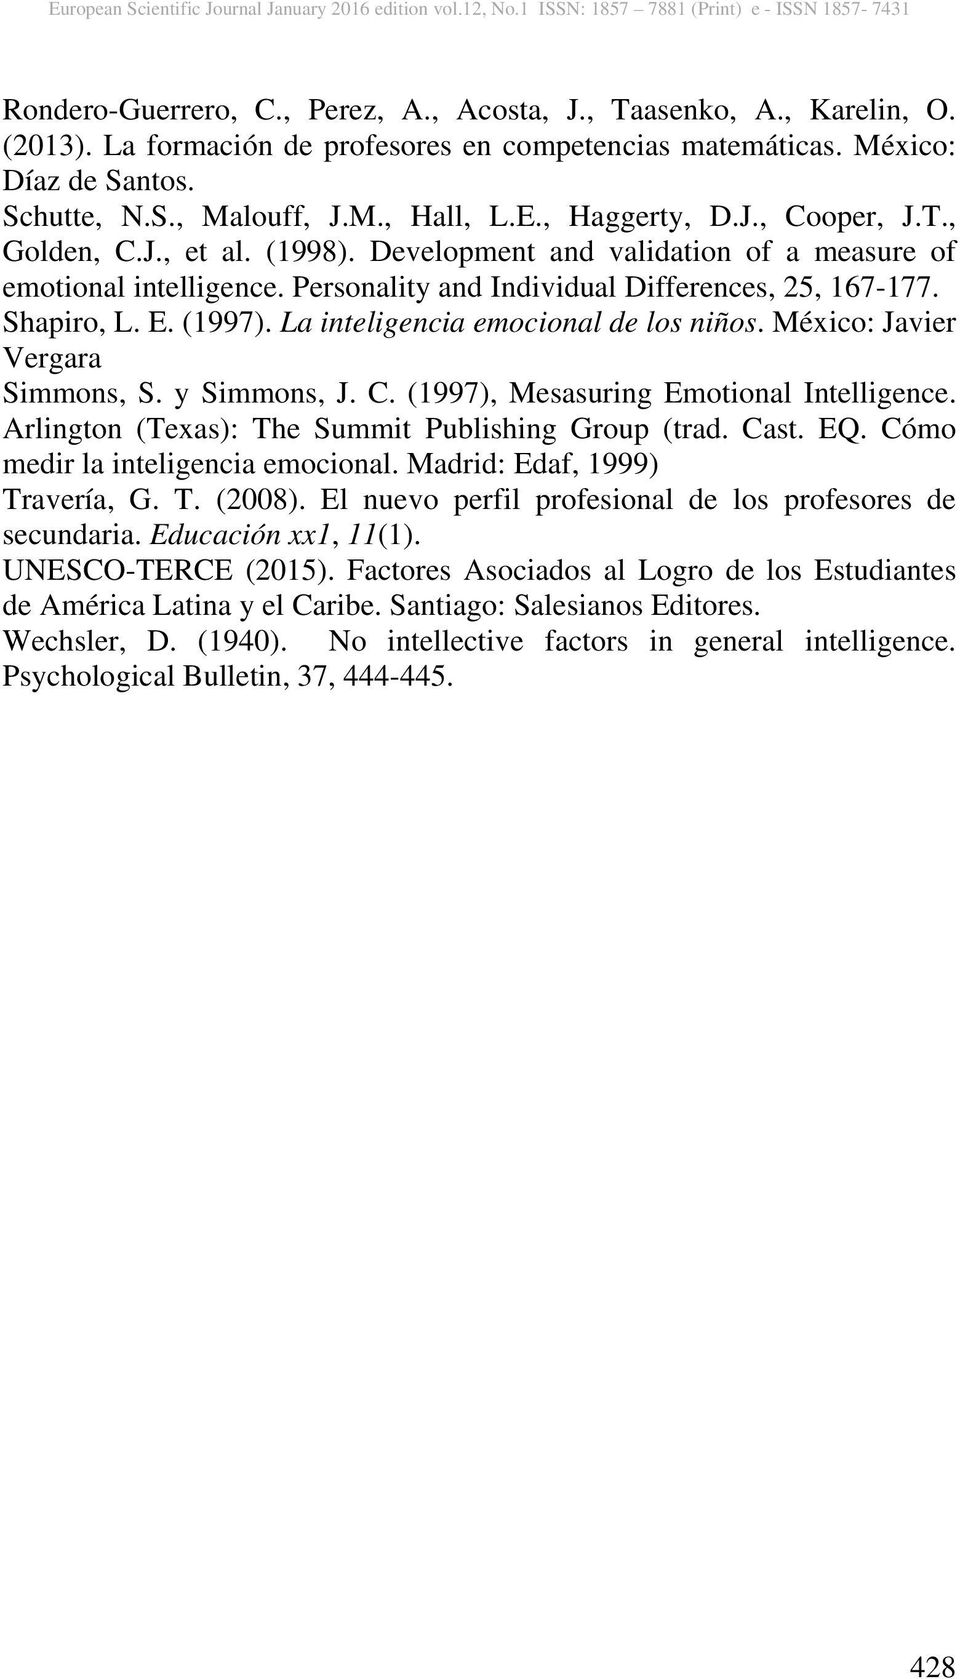 (1997). La inteligencia emocional de los niños. México: Javier Vergara Simmons, S. y Simmons, J. C. (1997), Mesasuring Emotional Intelligence. Arlington (Texas): The Summit Publishing Group (trad.